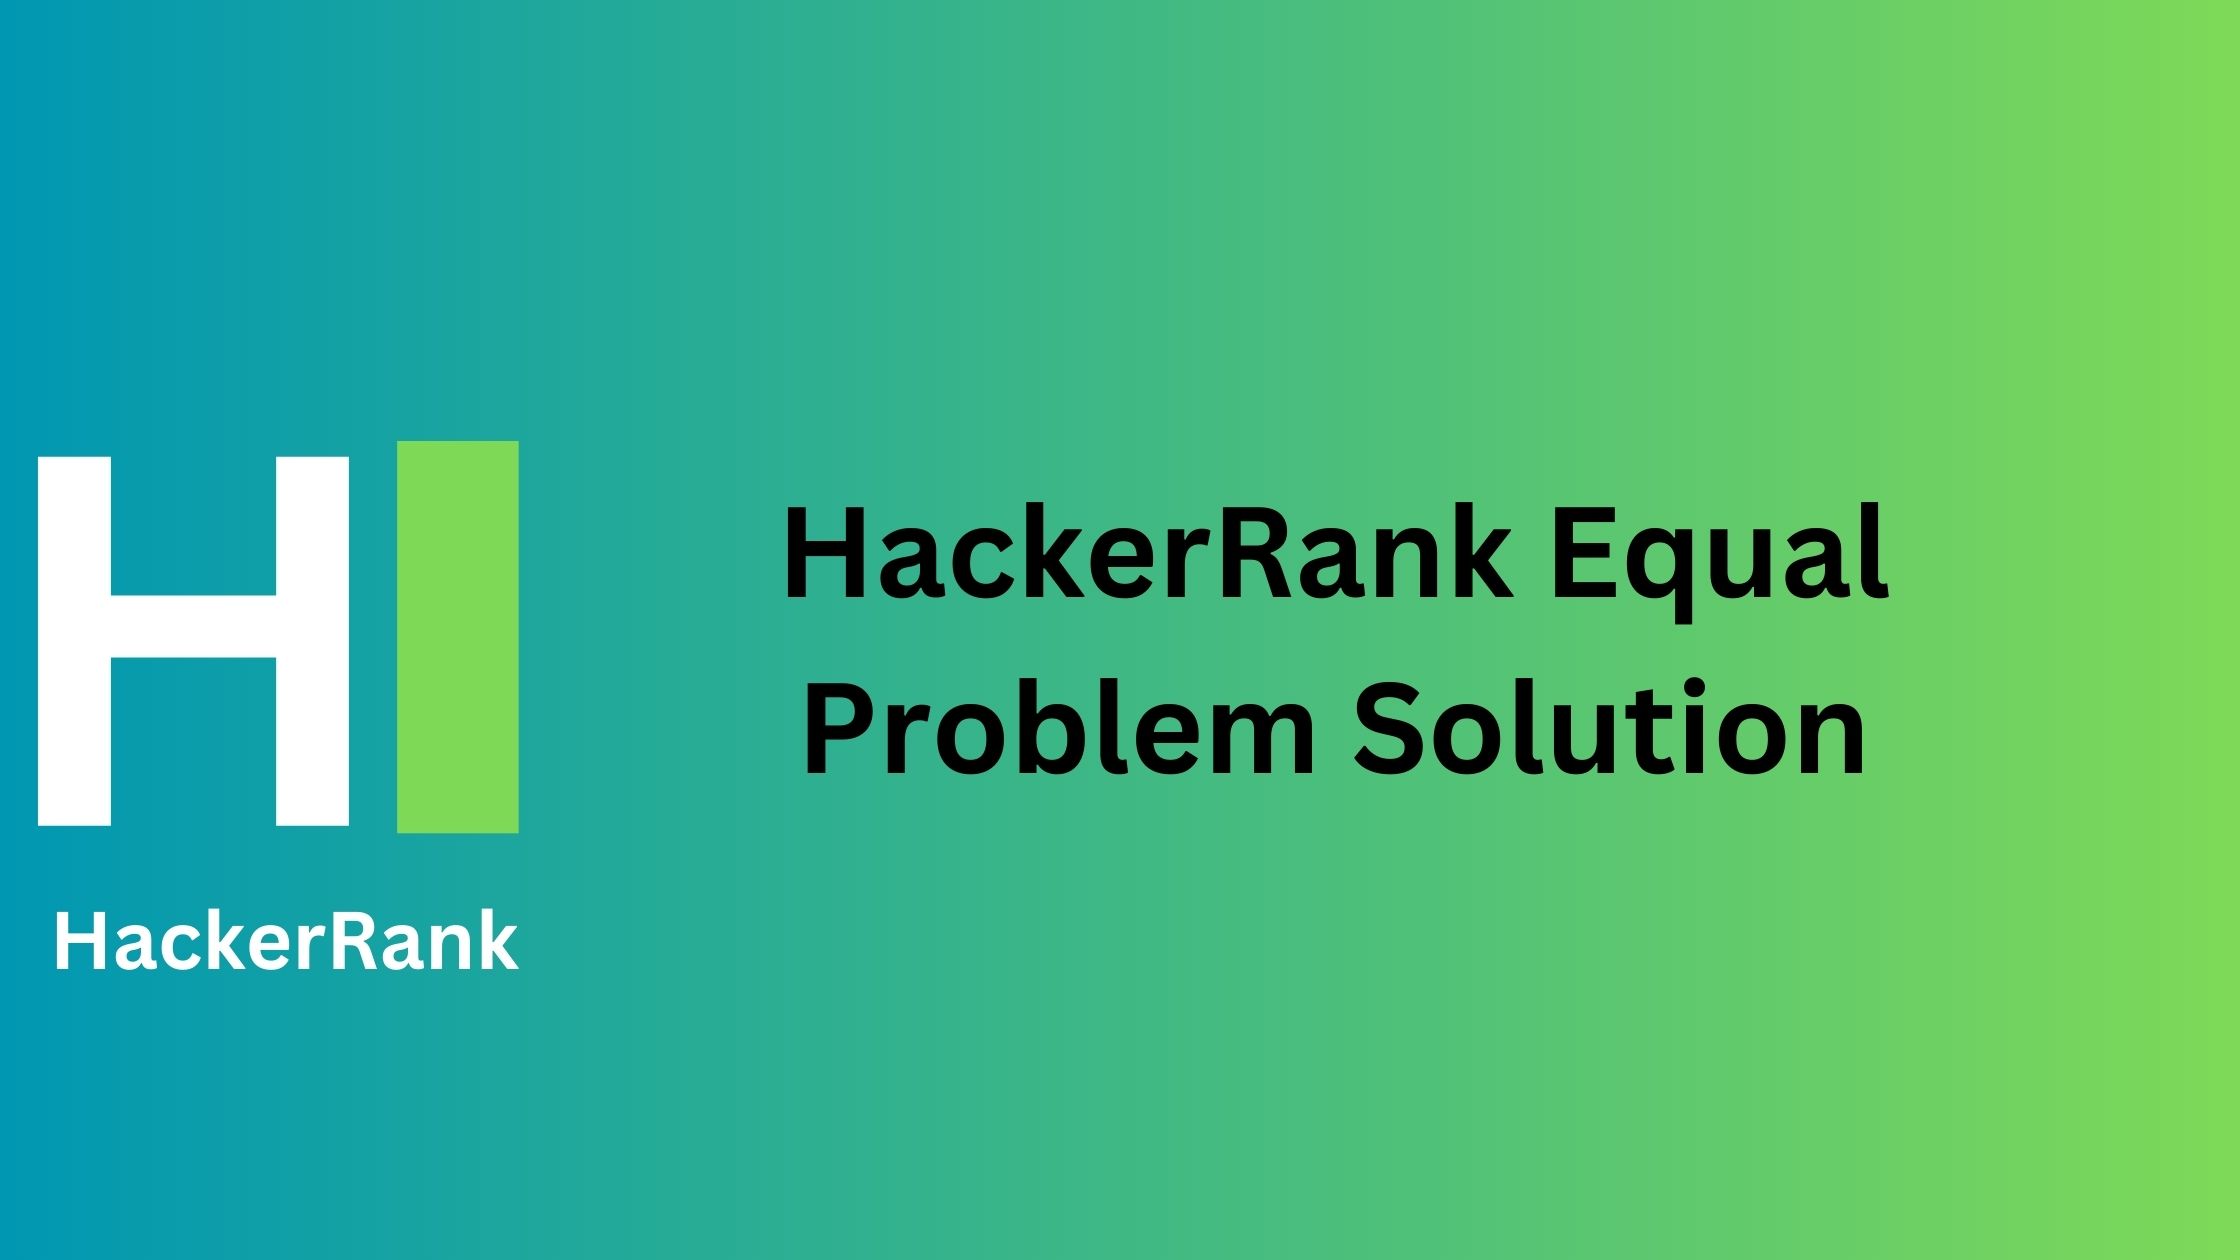 HackerRank Equal Problem Solution